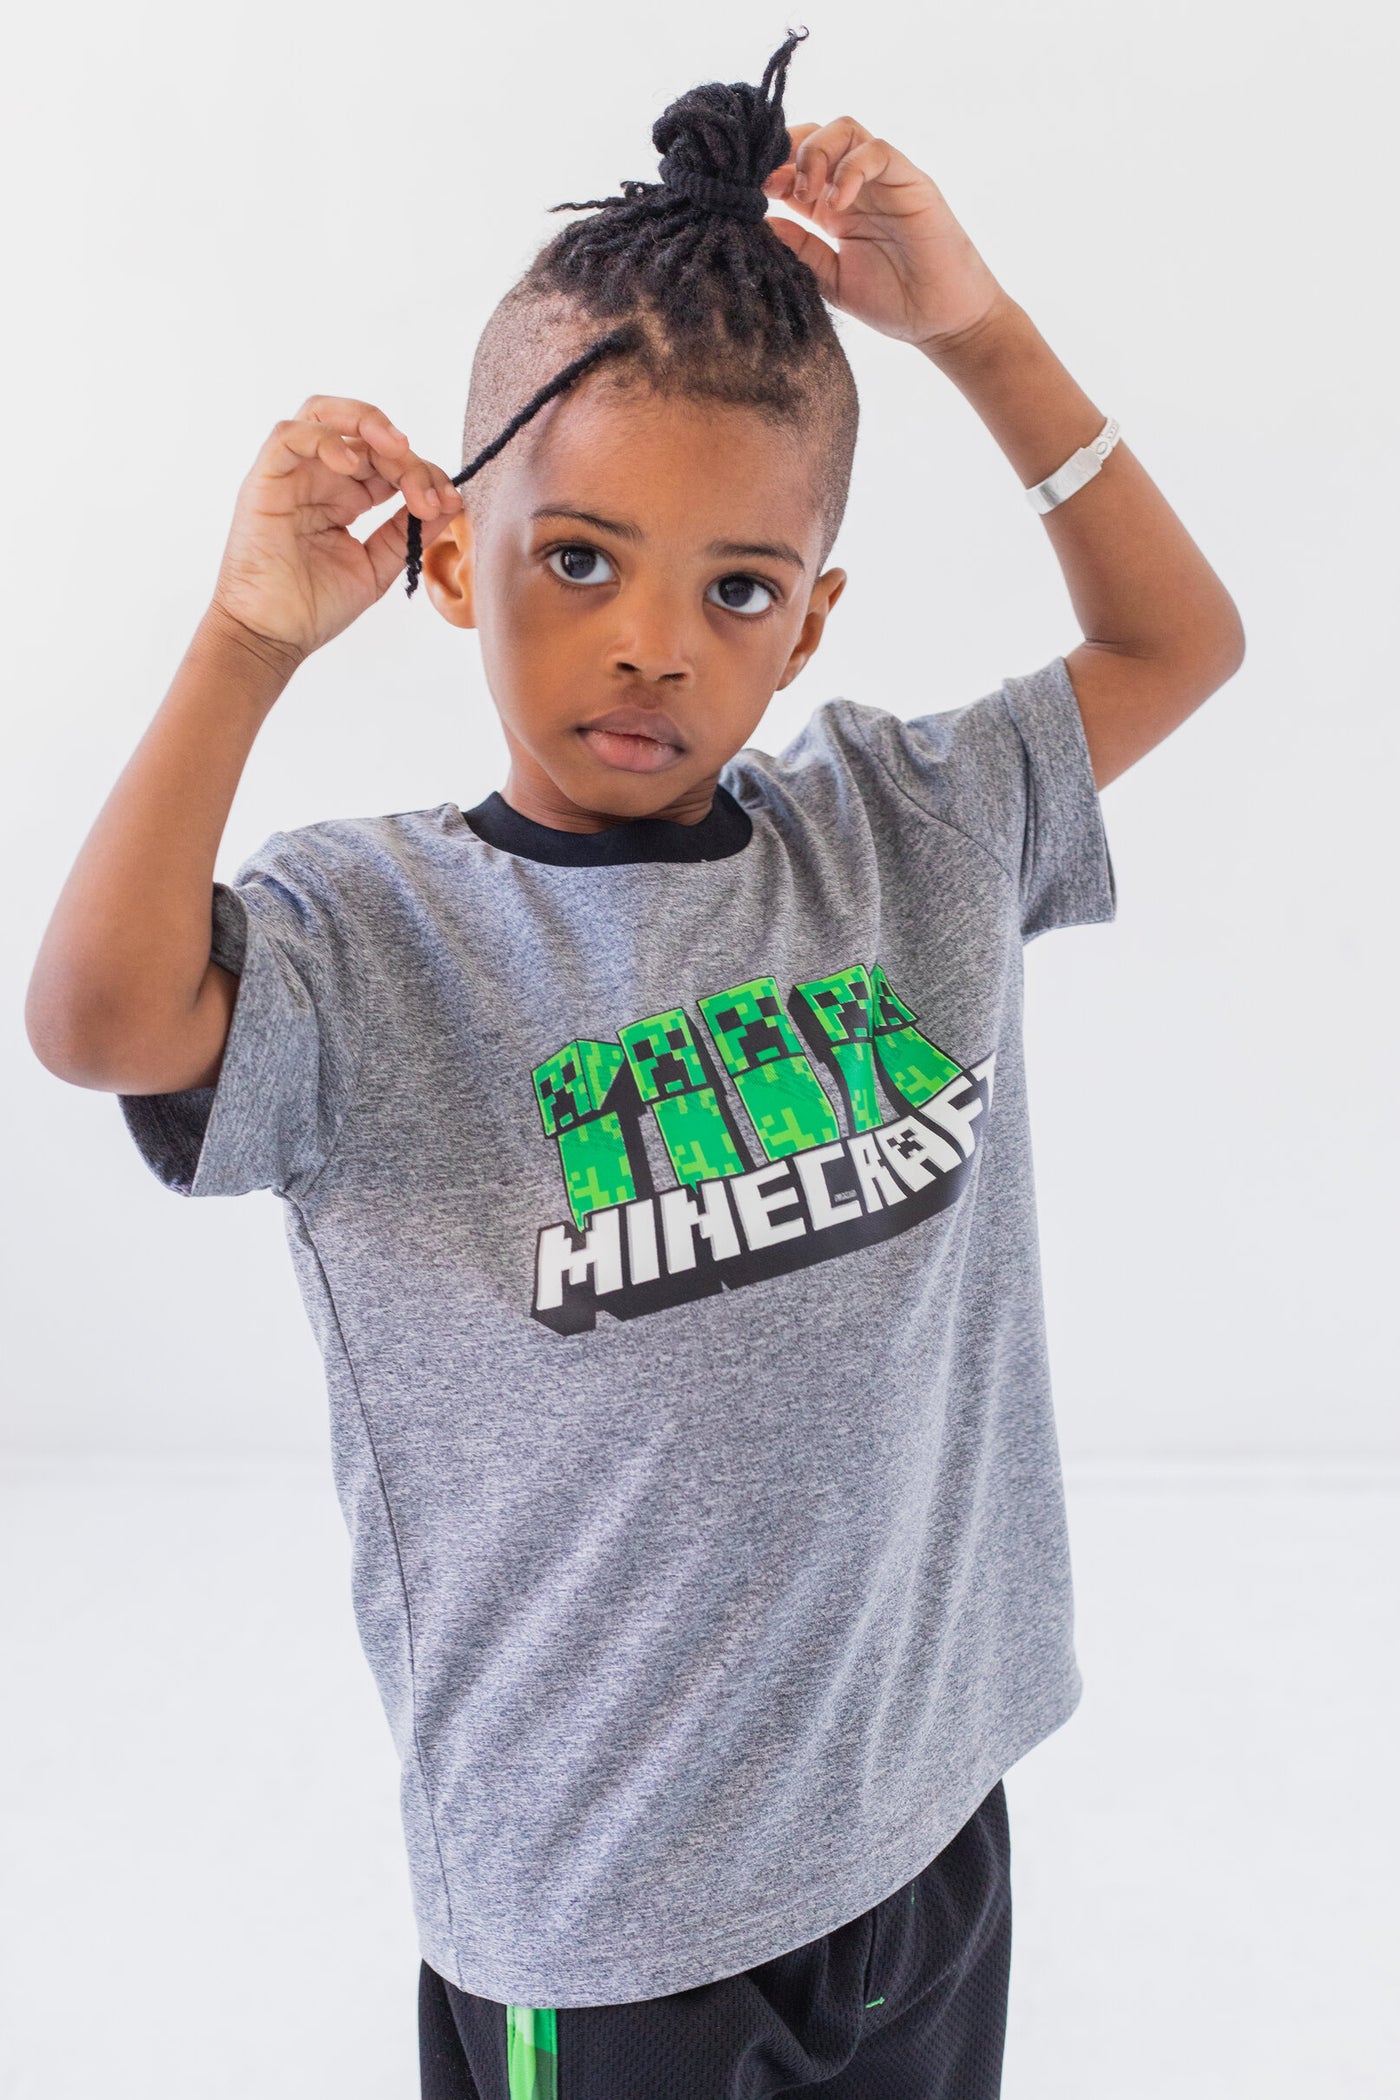 Minecraft Creeper Camiseta de malla Tank Top Shorts